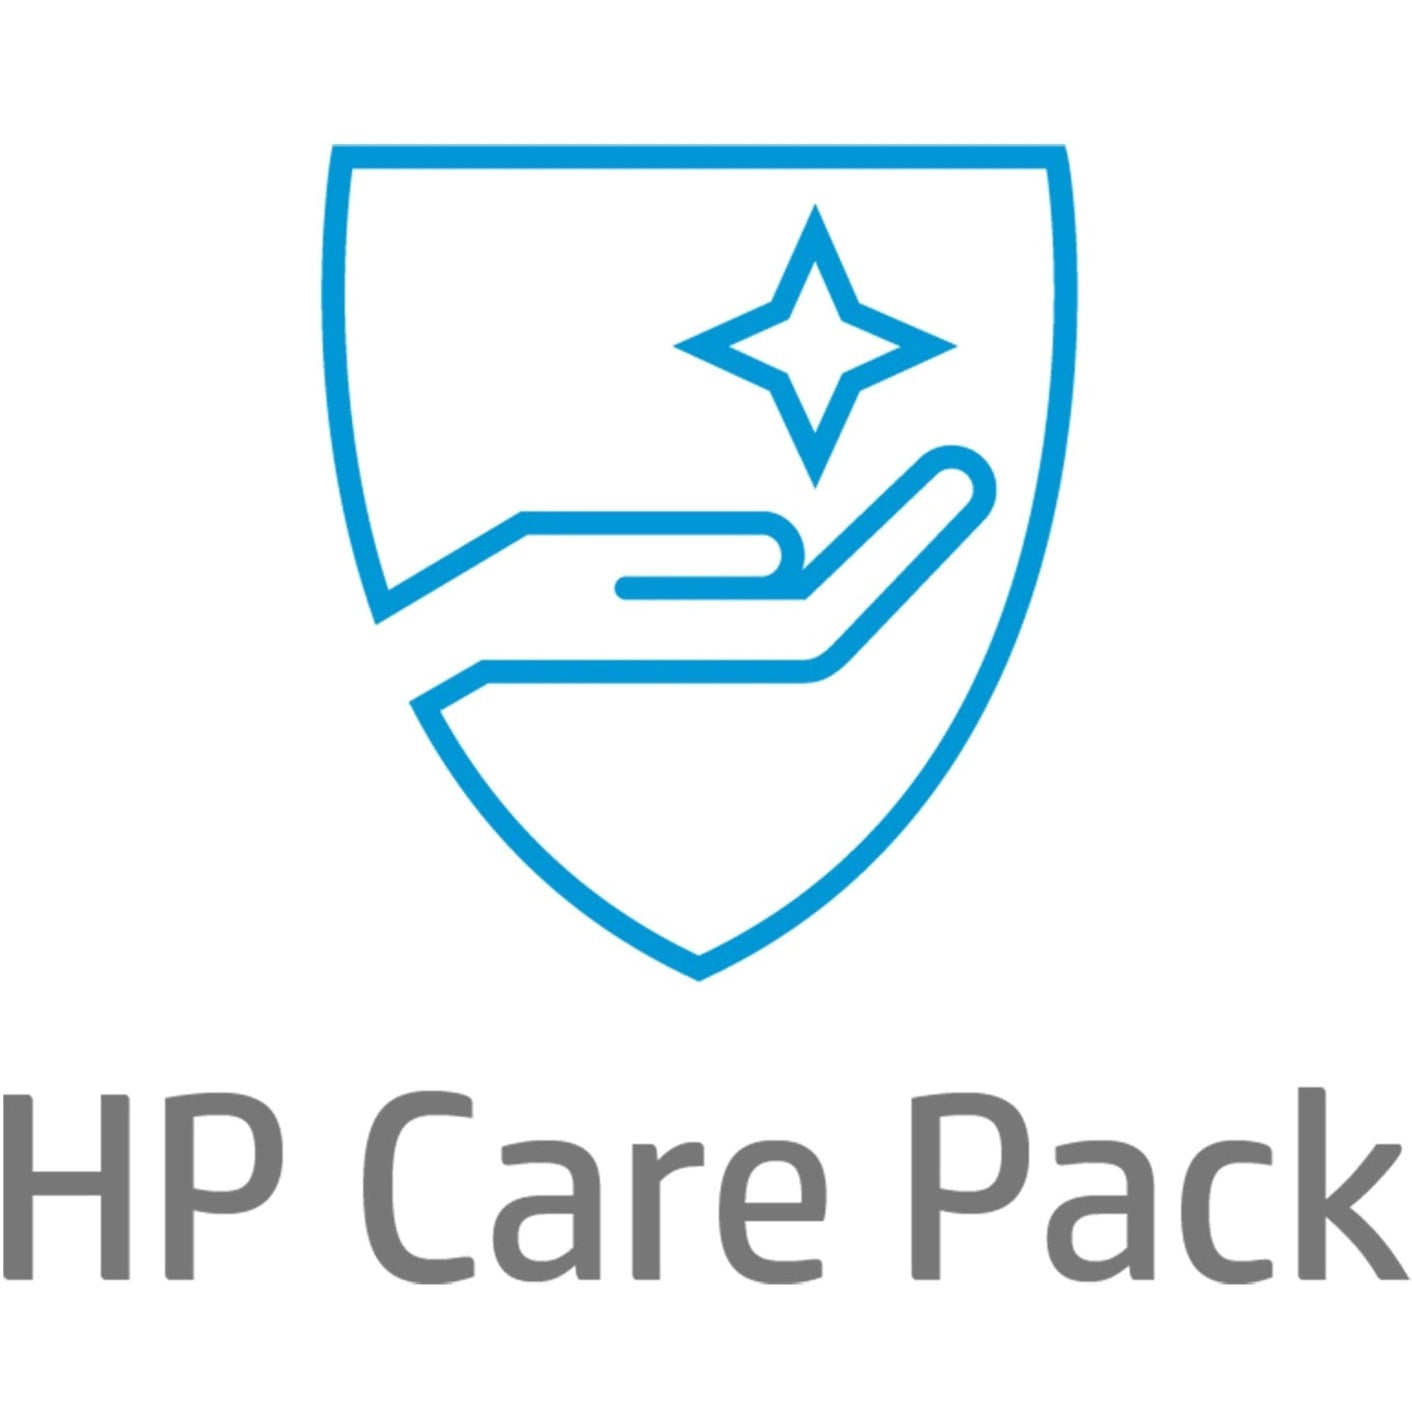 HP Care Pack - 3 Year - Warranty (UA7A3E)